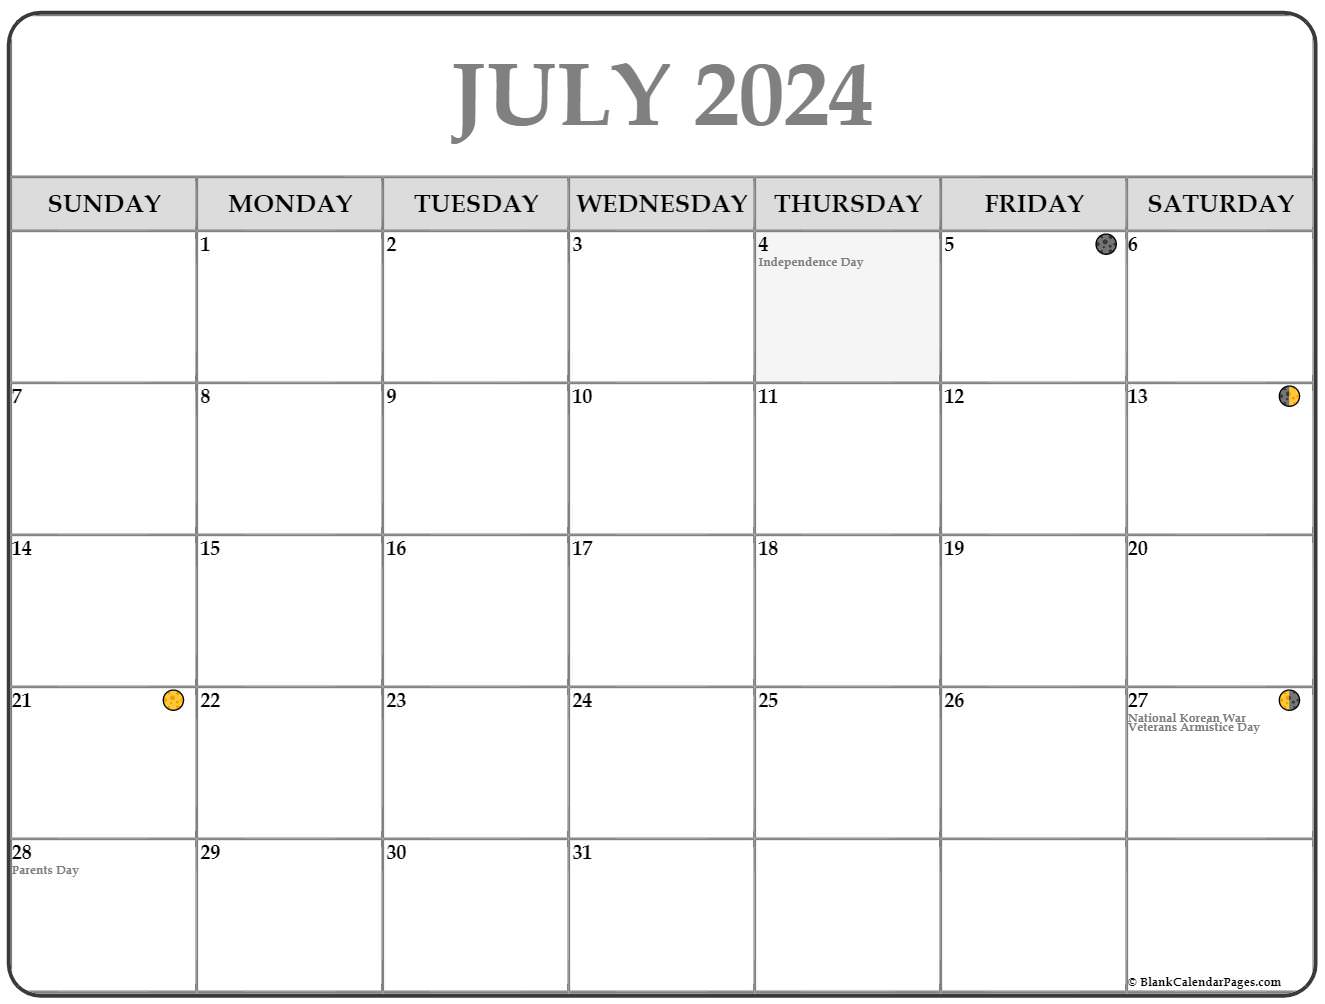 july-2024-lunar-calendar-moon-phase-calendar